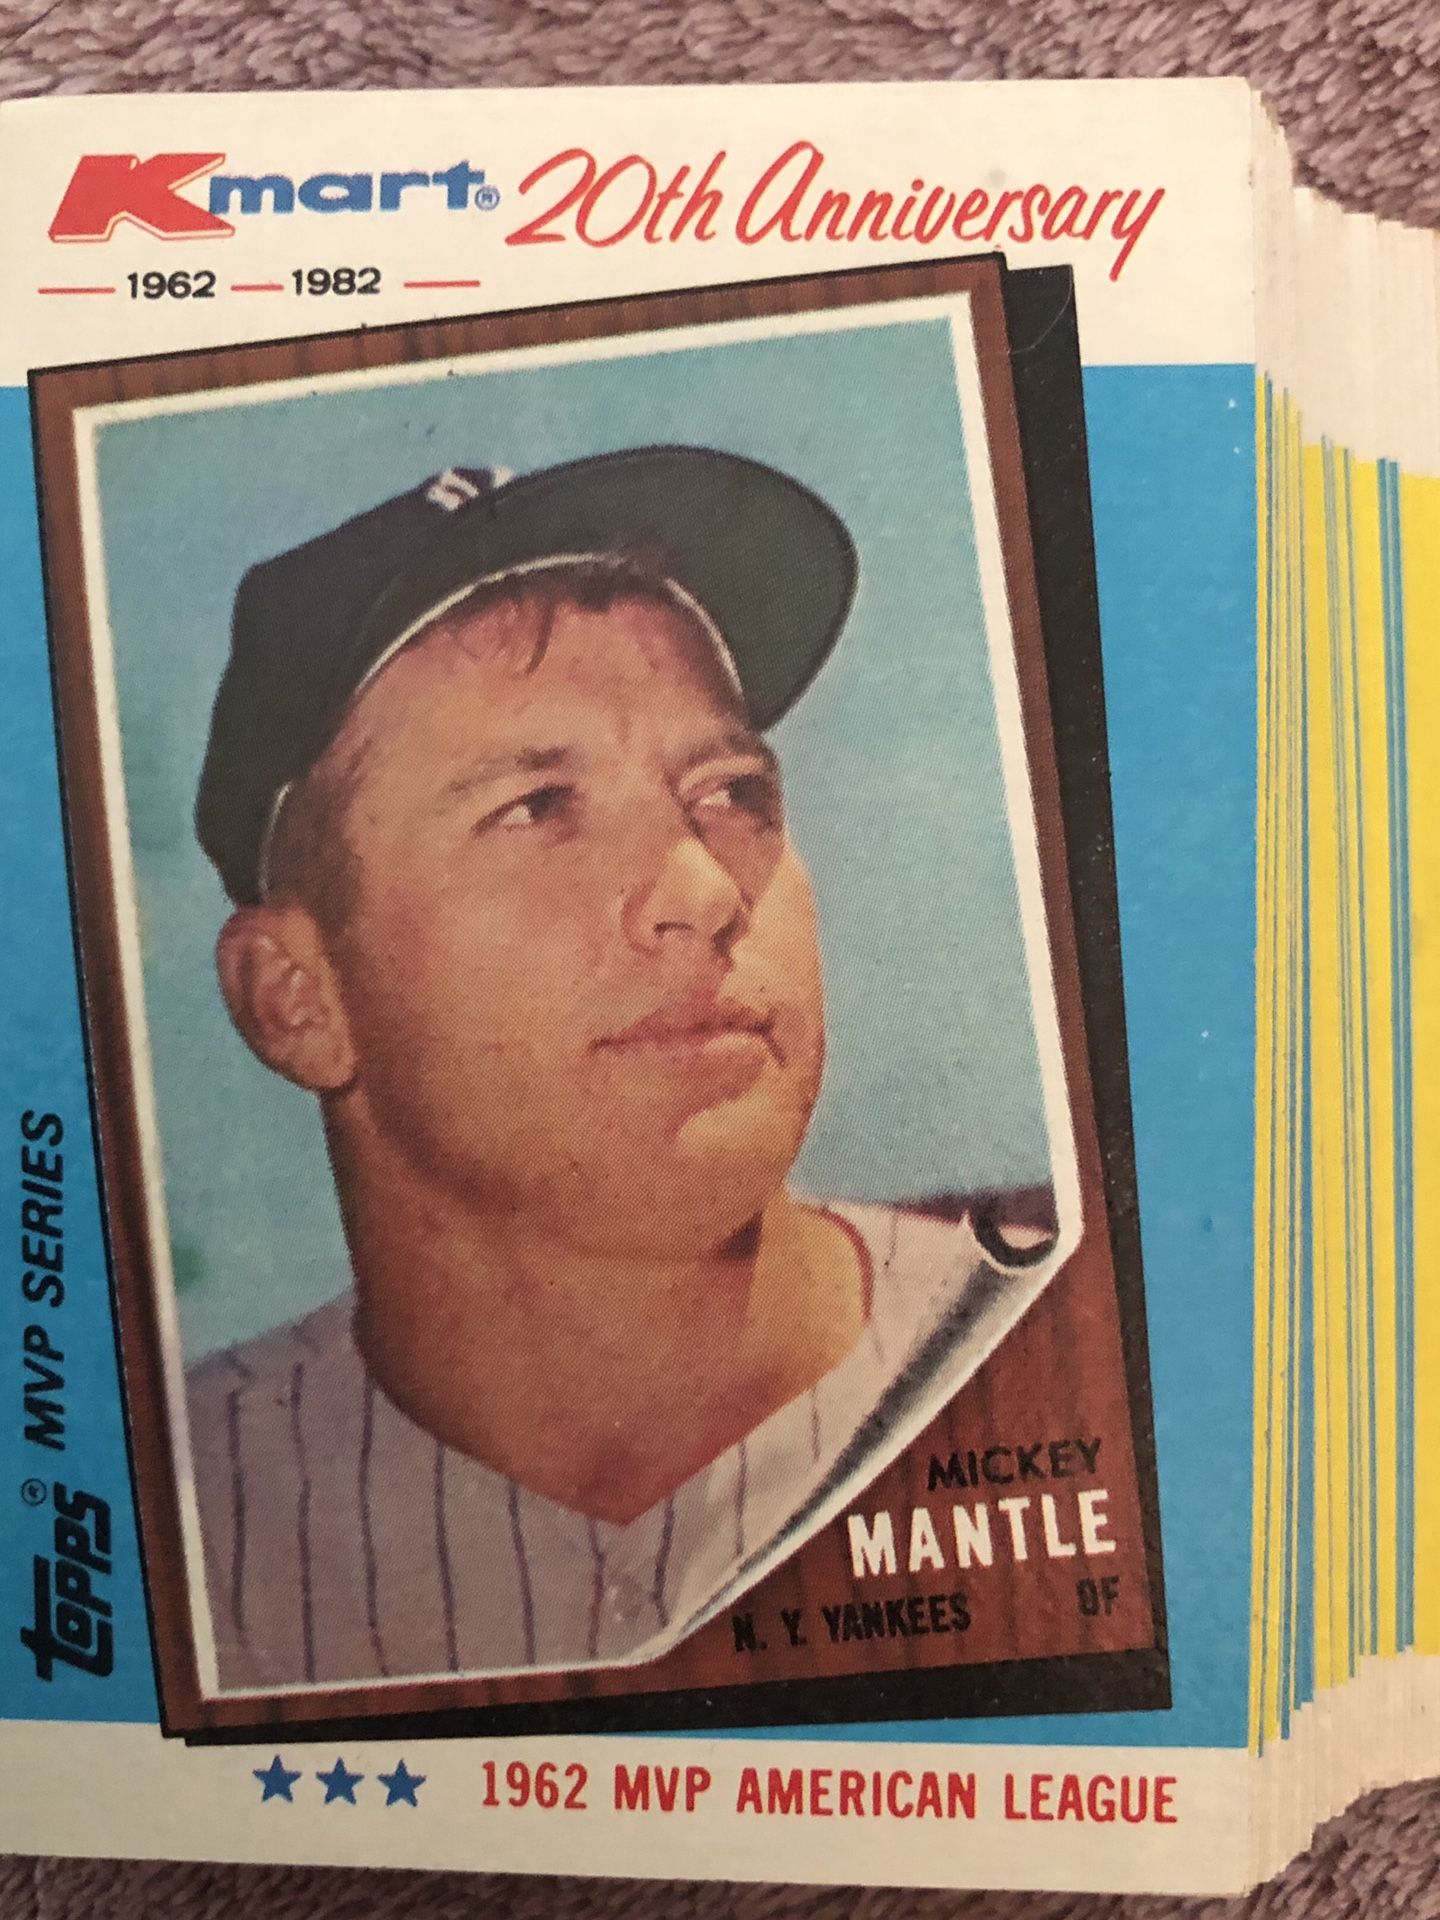 Baseball Cards - Kmart 20th Anniversary Set of 44